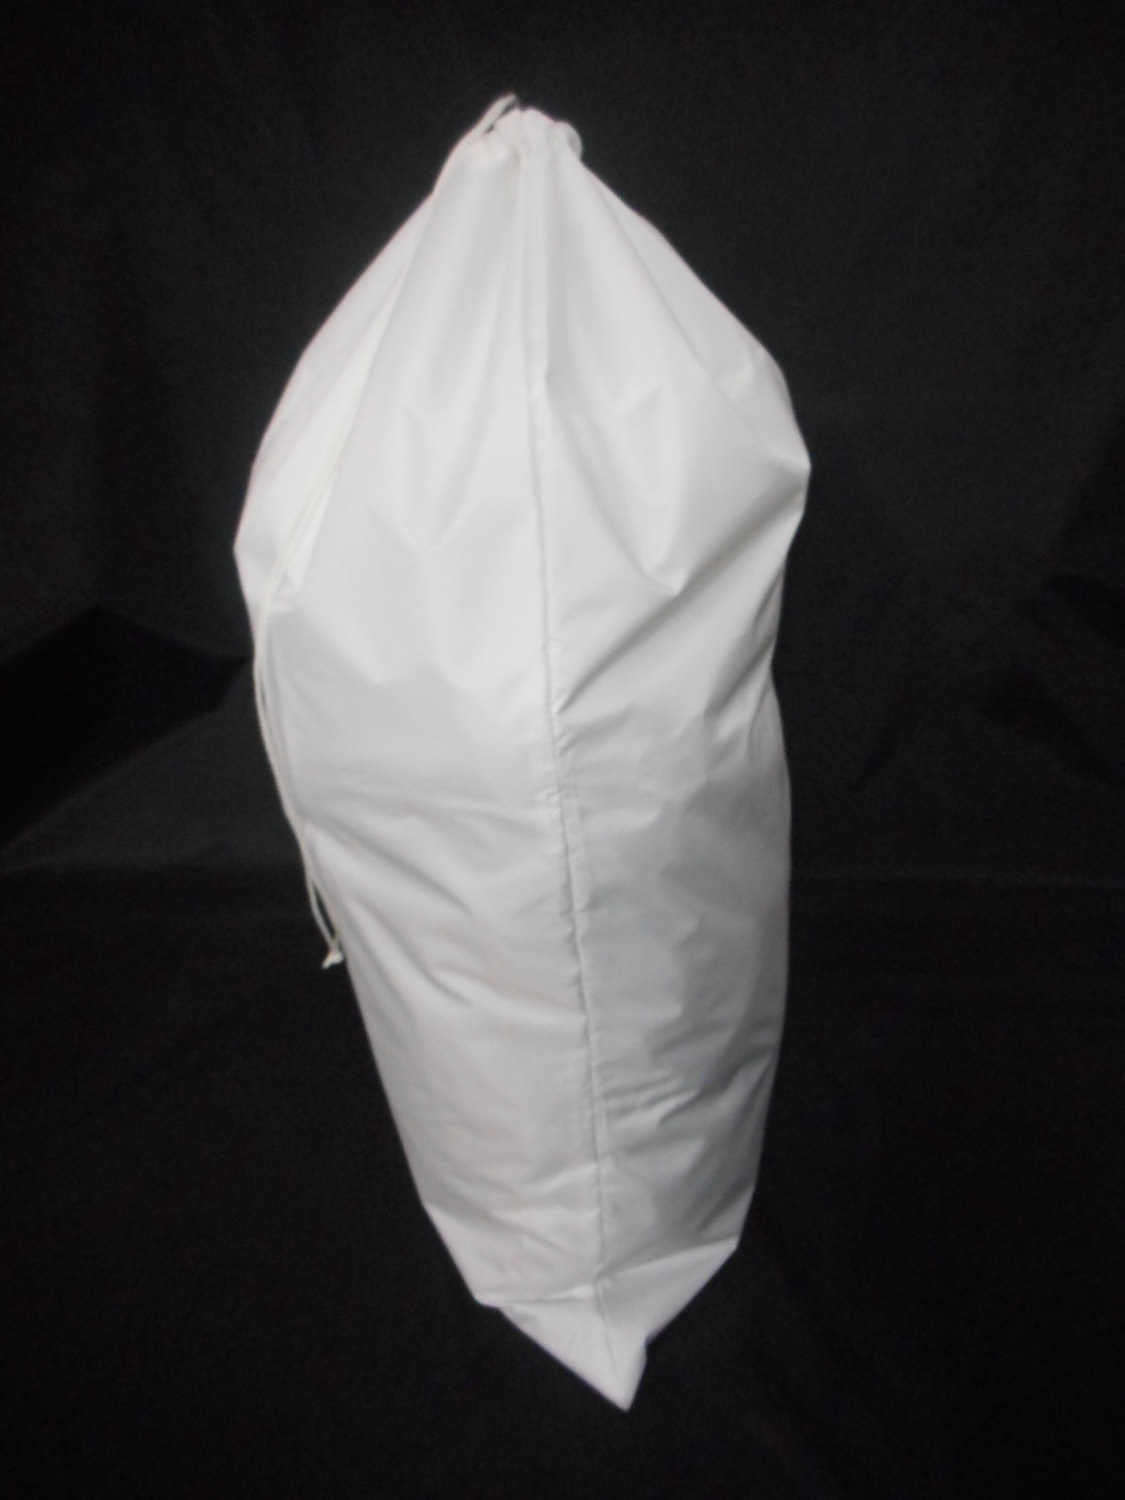 Laundry bag heavy duty Jumbo sized nylon holds approximately 40 lb Made in USA. 